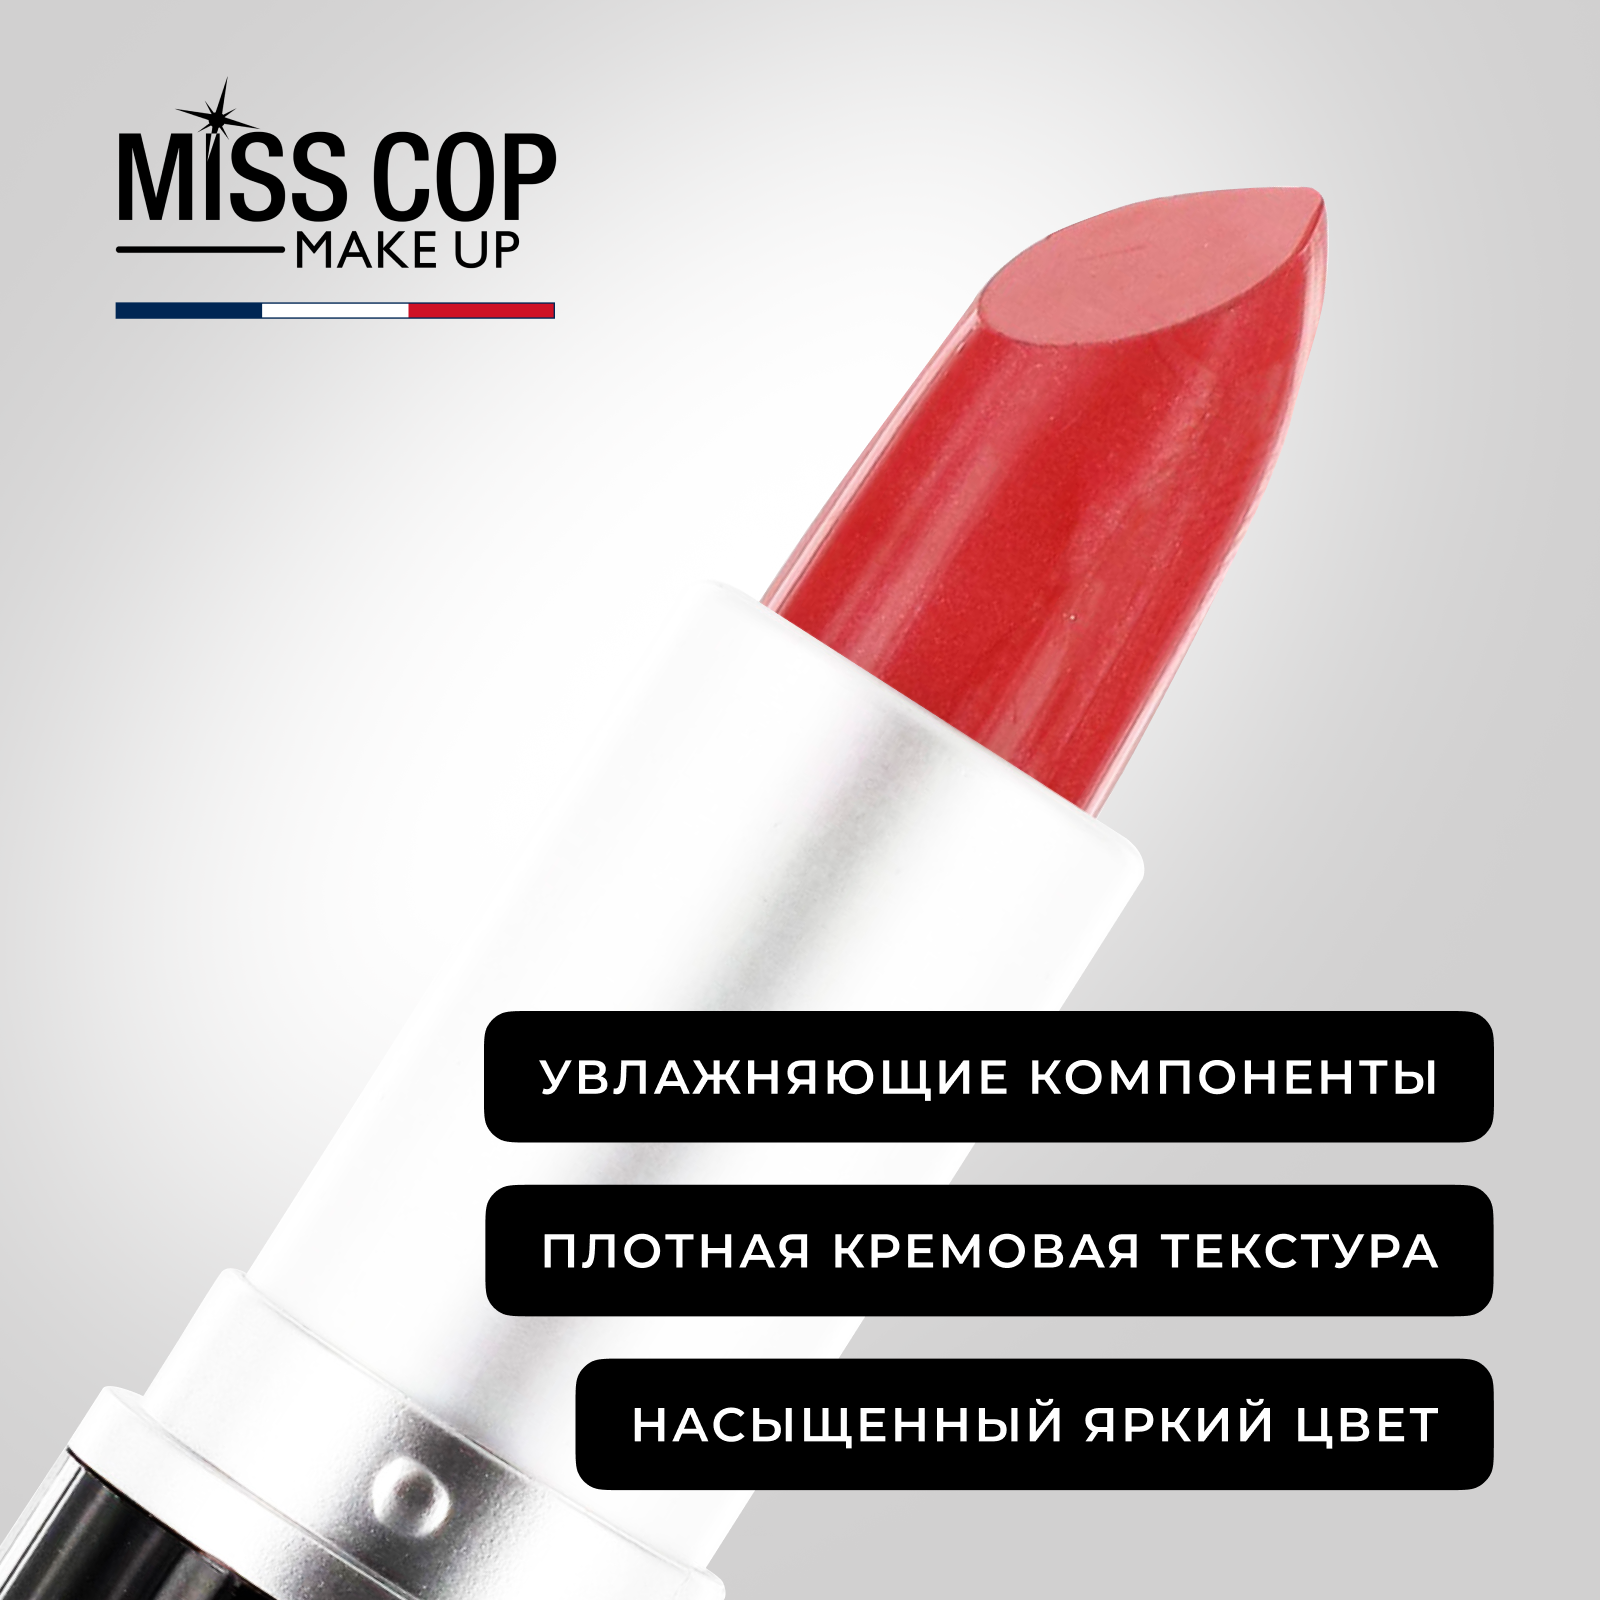 Помада губная матовая красная MISS COP стойкая, цвет 20 Poivron rouge (перец), 3 г